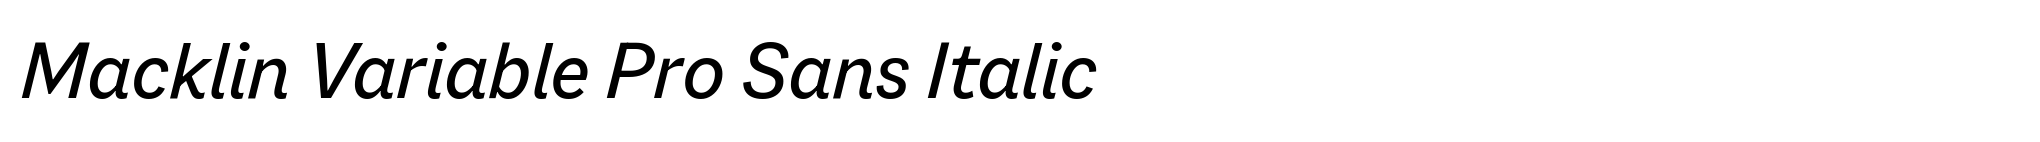 Macklin Variable Pro Sans Italic image